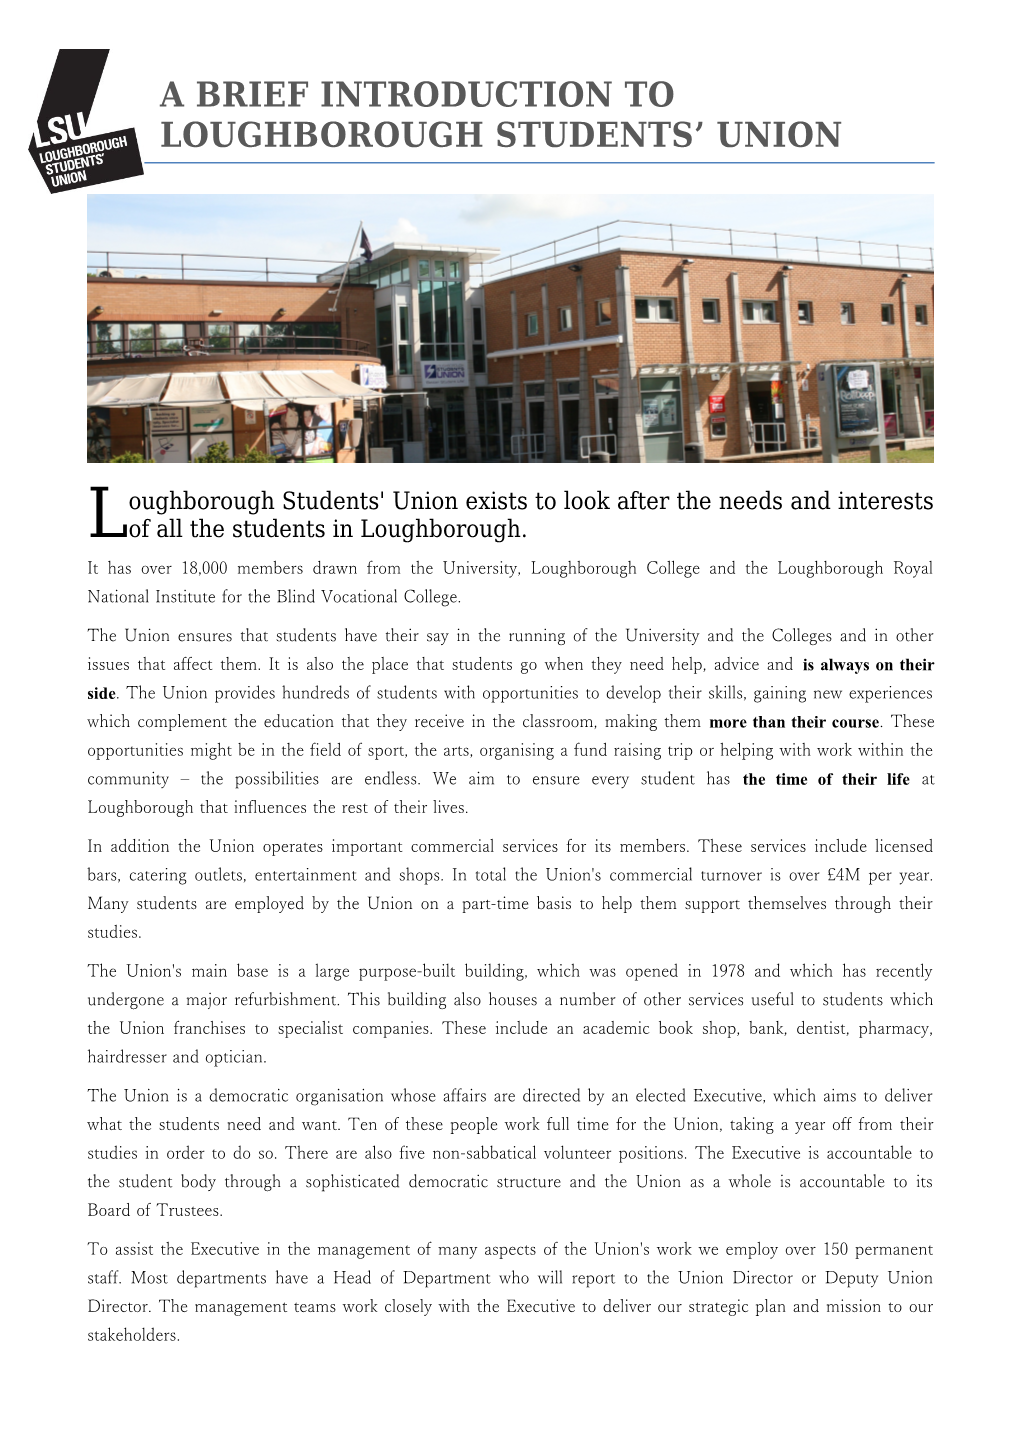 Loughborough Students Union